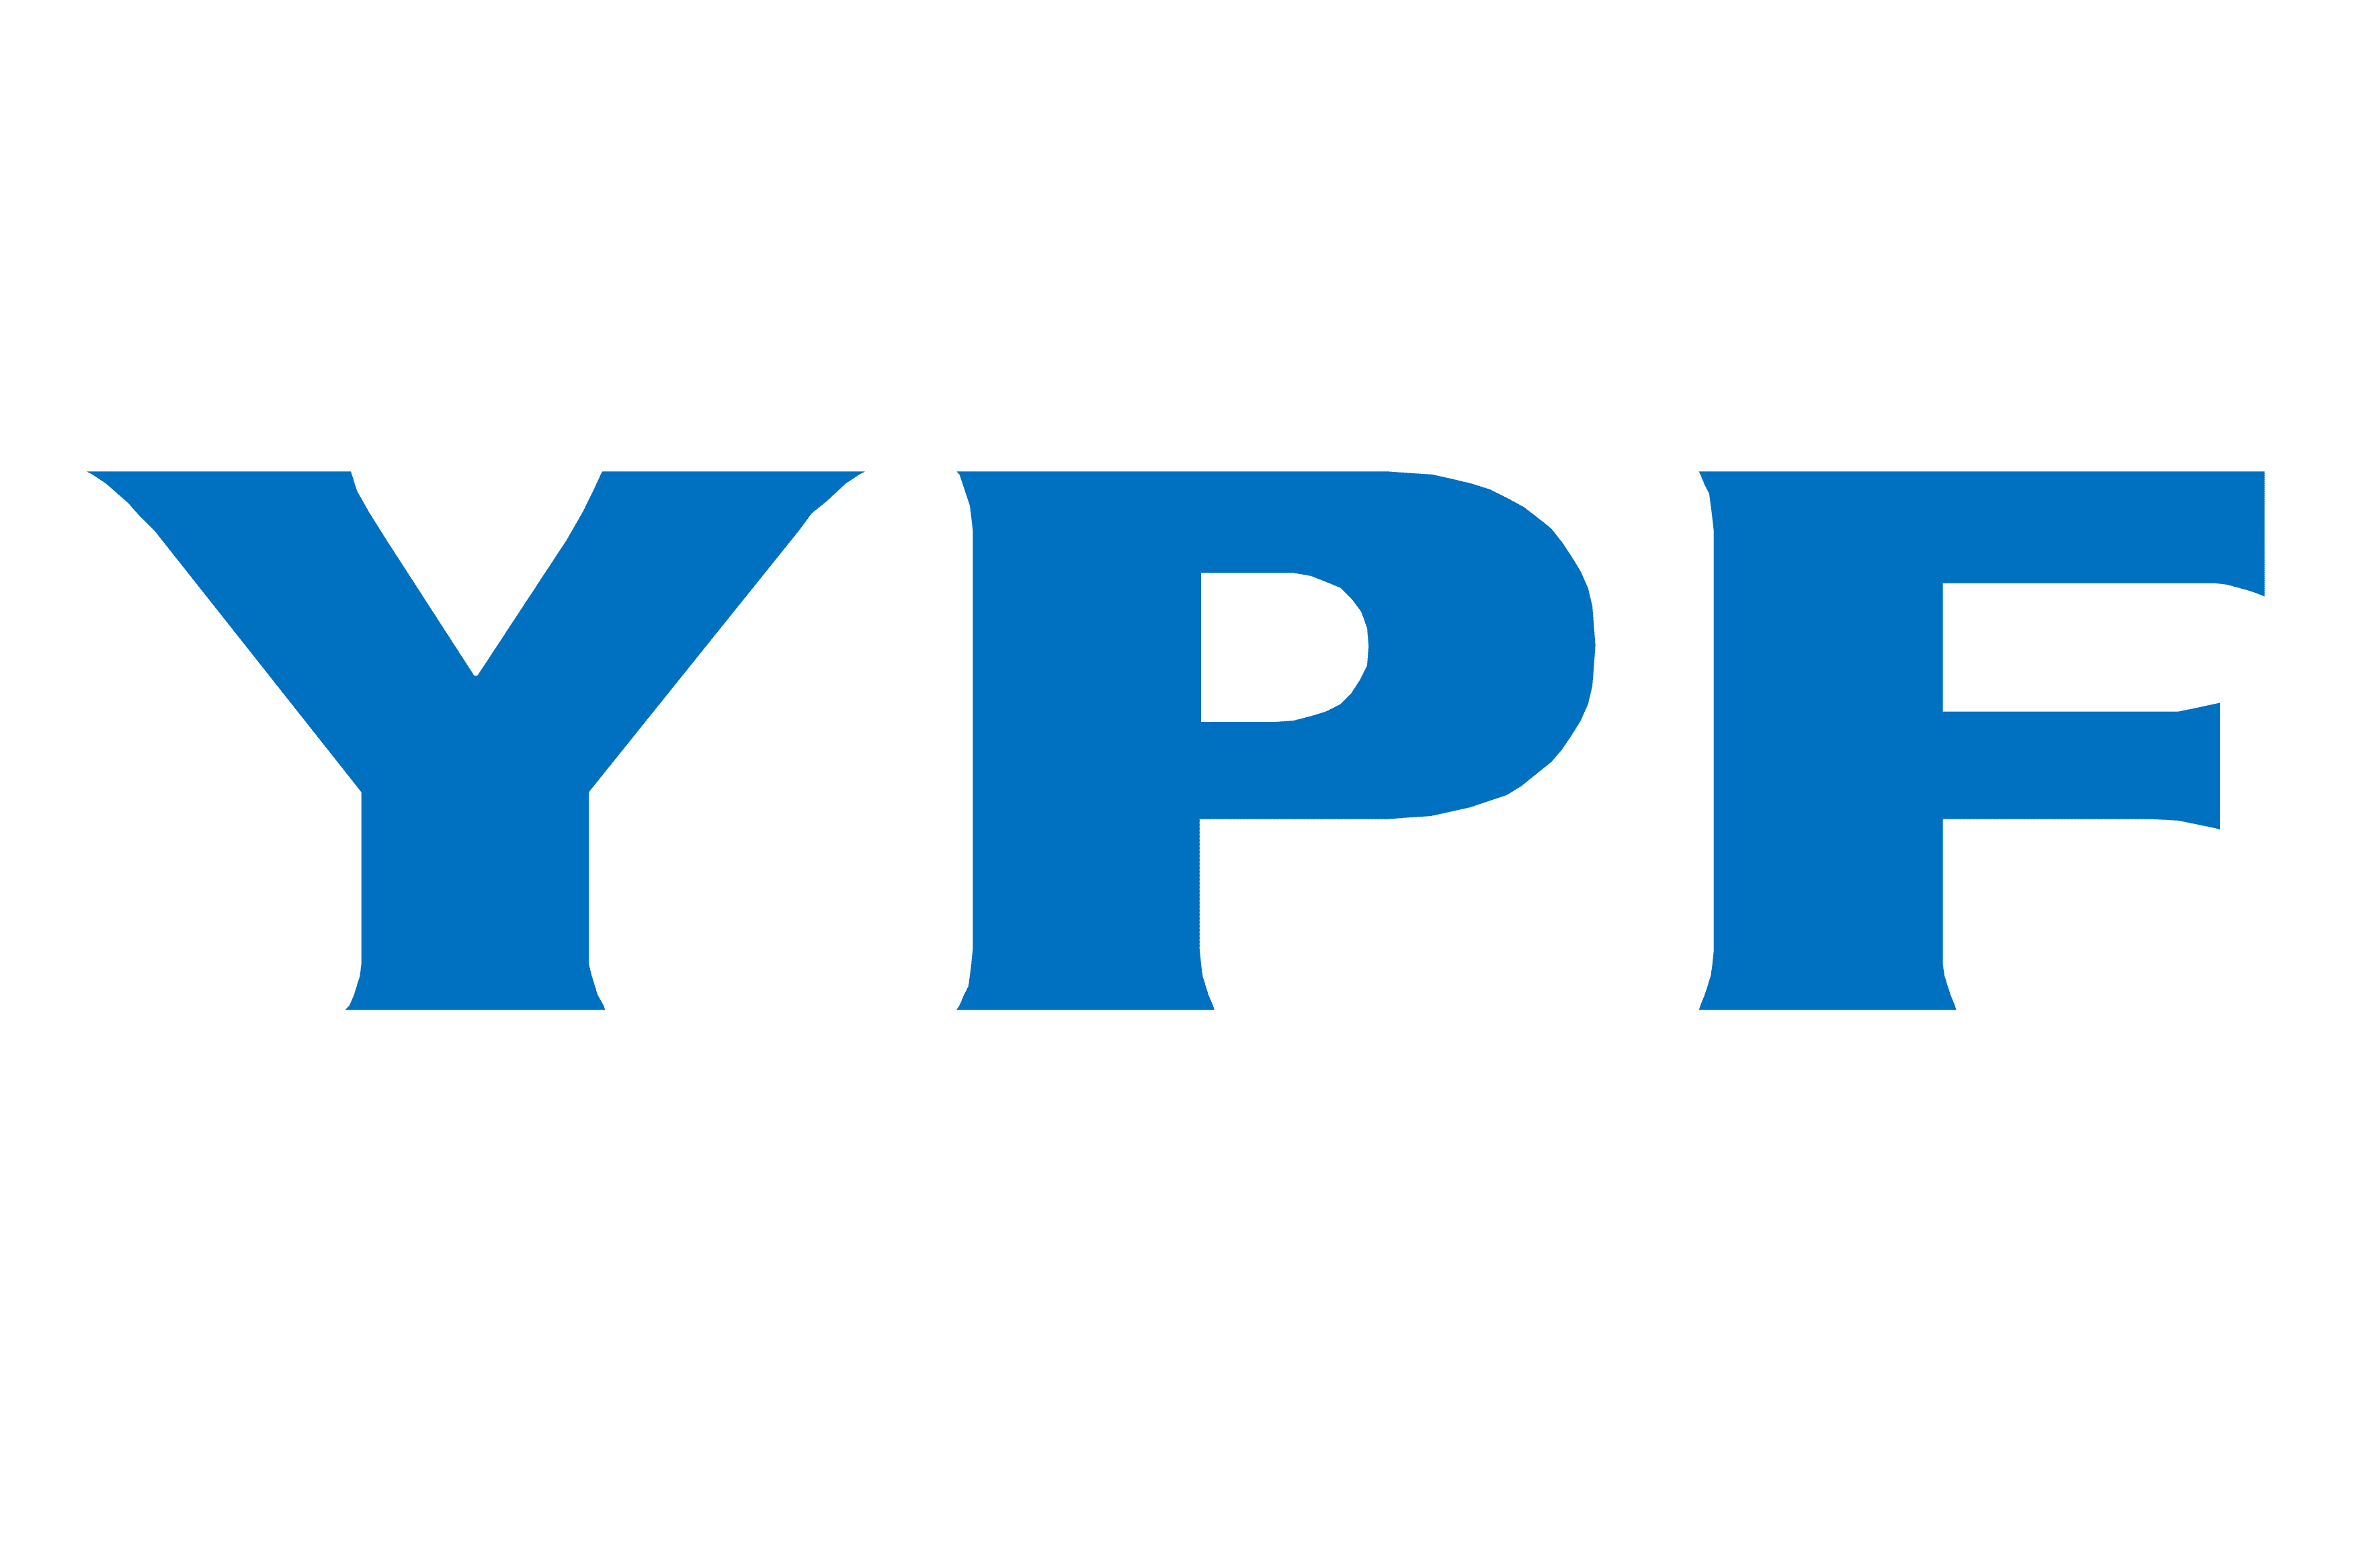 YPF-logo